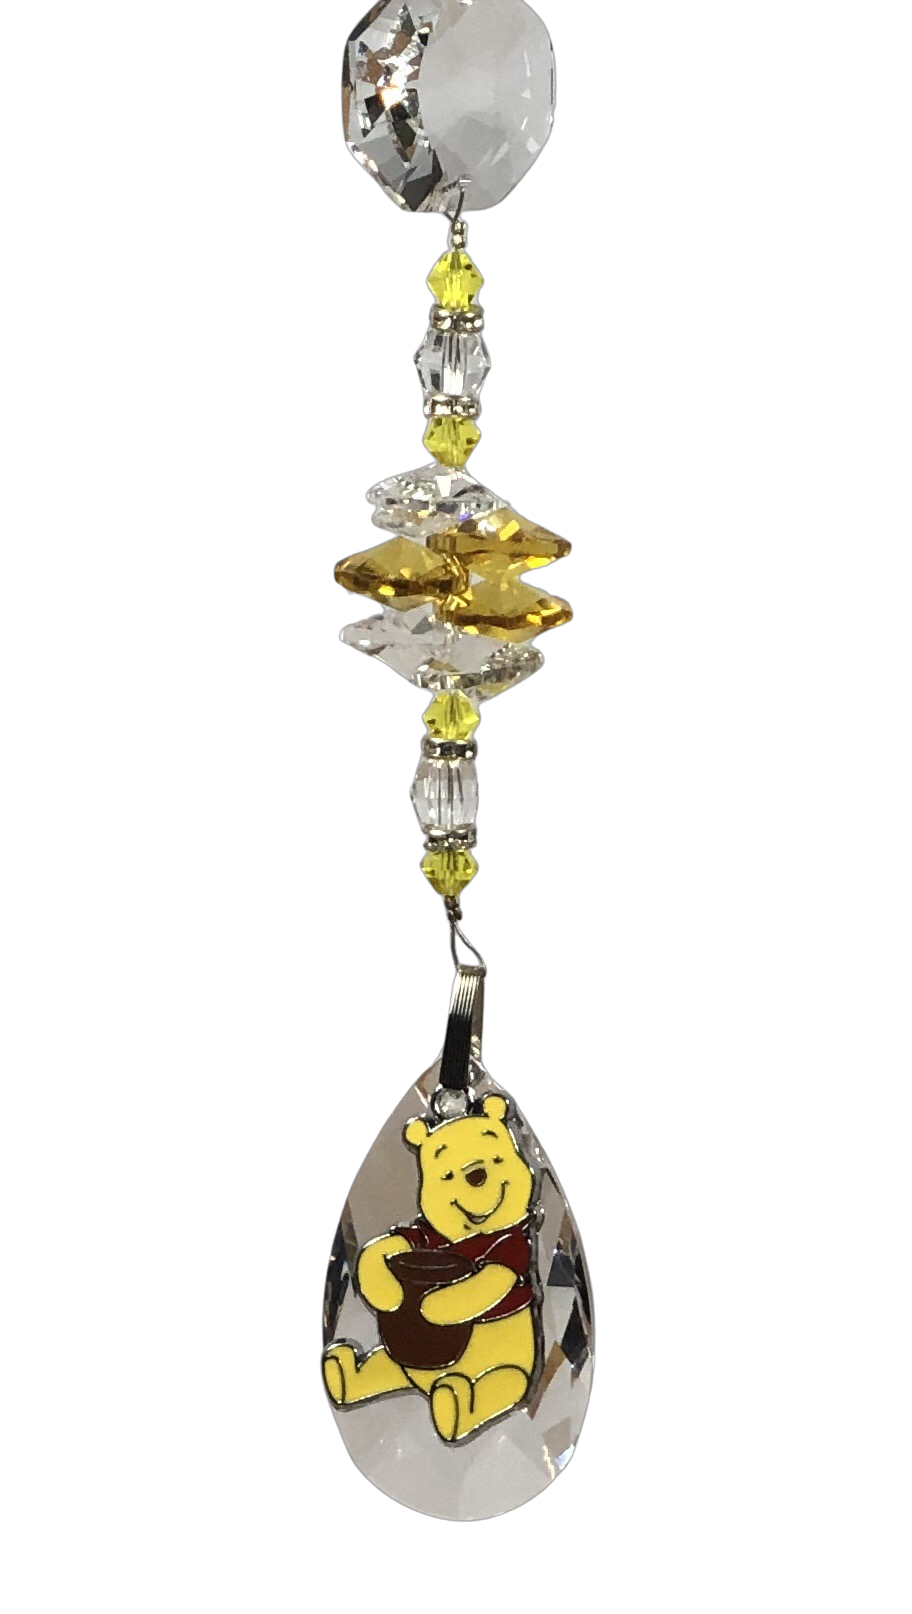 Winnie the Pooh crystal suncatcher with citrine gemstones